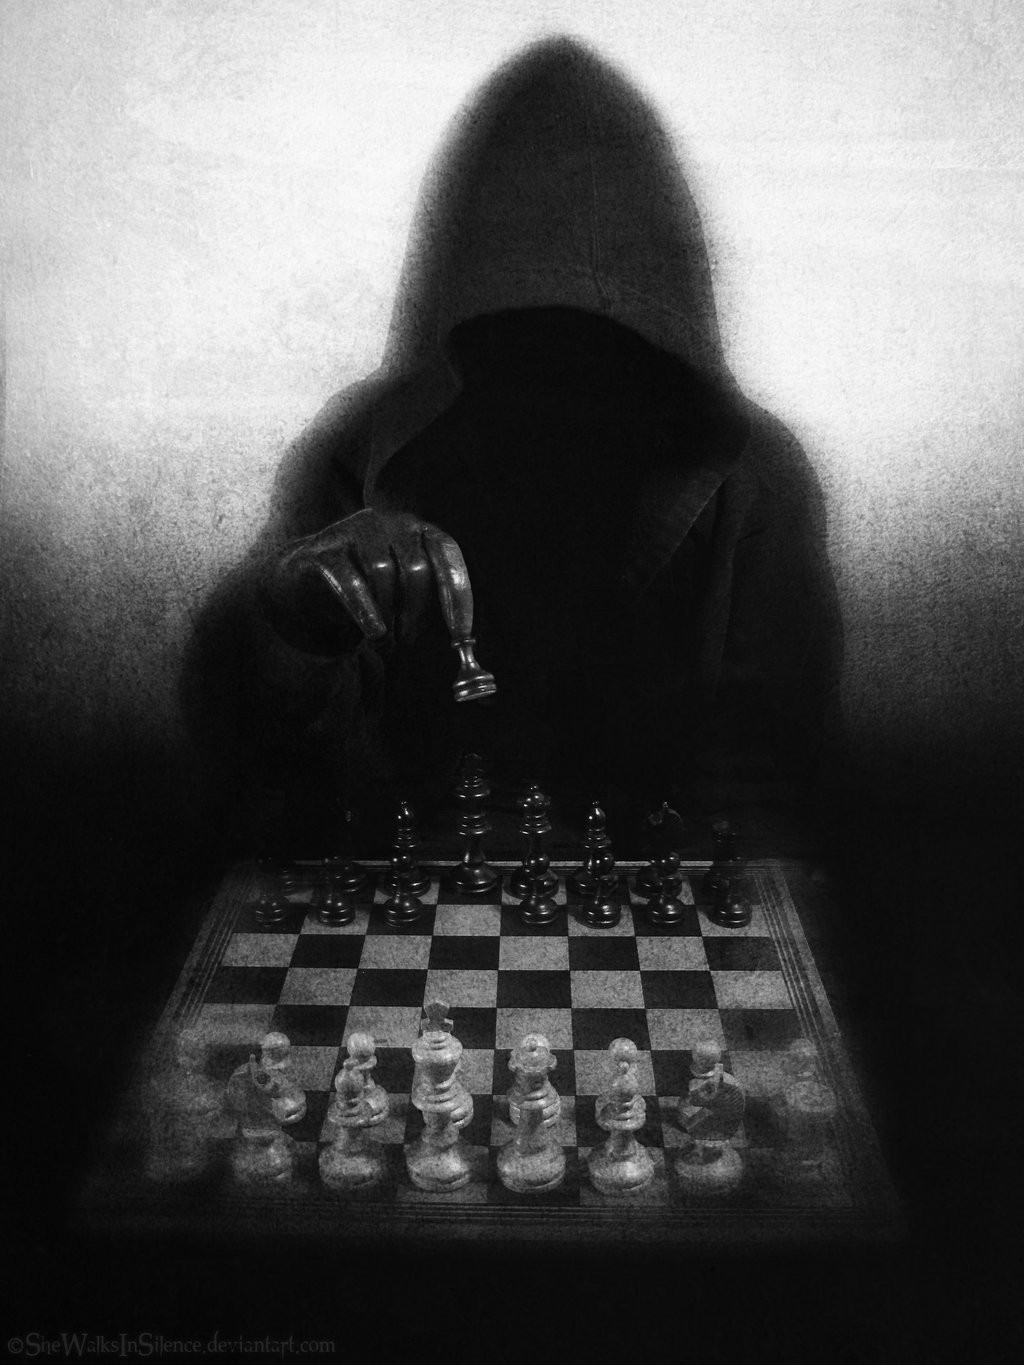 digital Art, Grim Reaper, Death, Dark, Monochrome, Spooky, Chess, Board